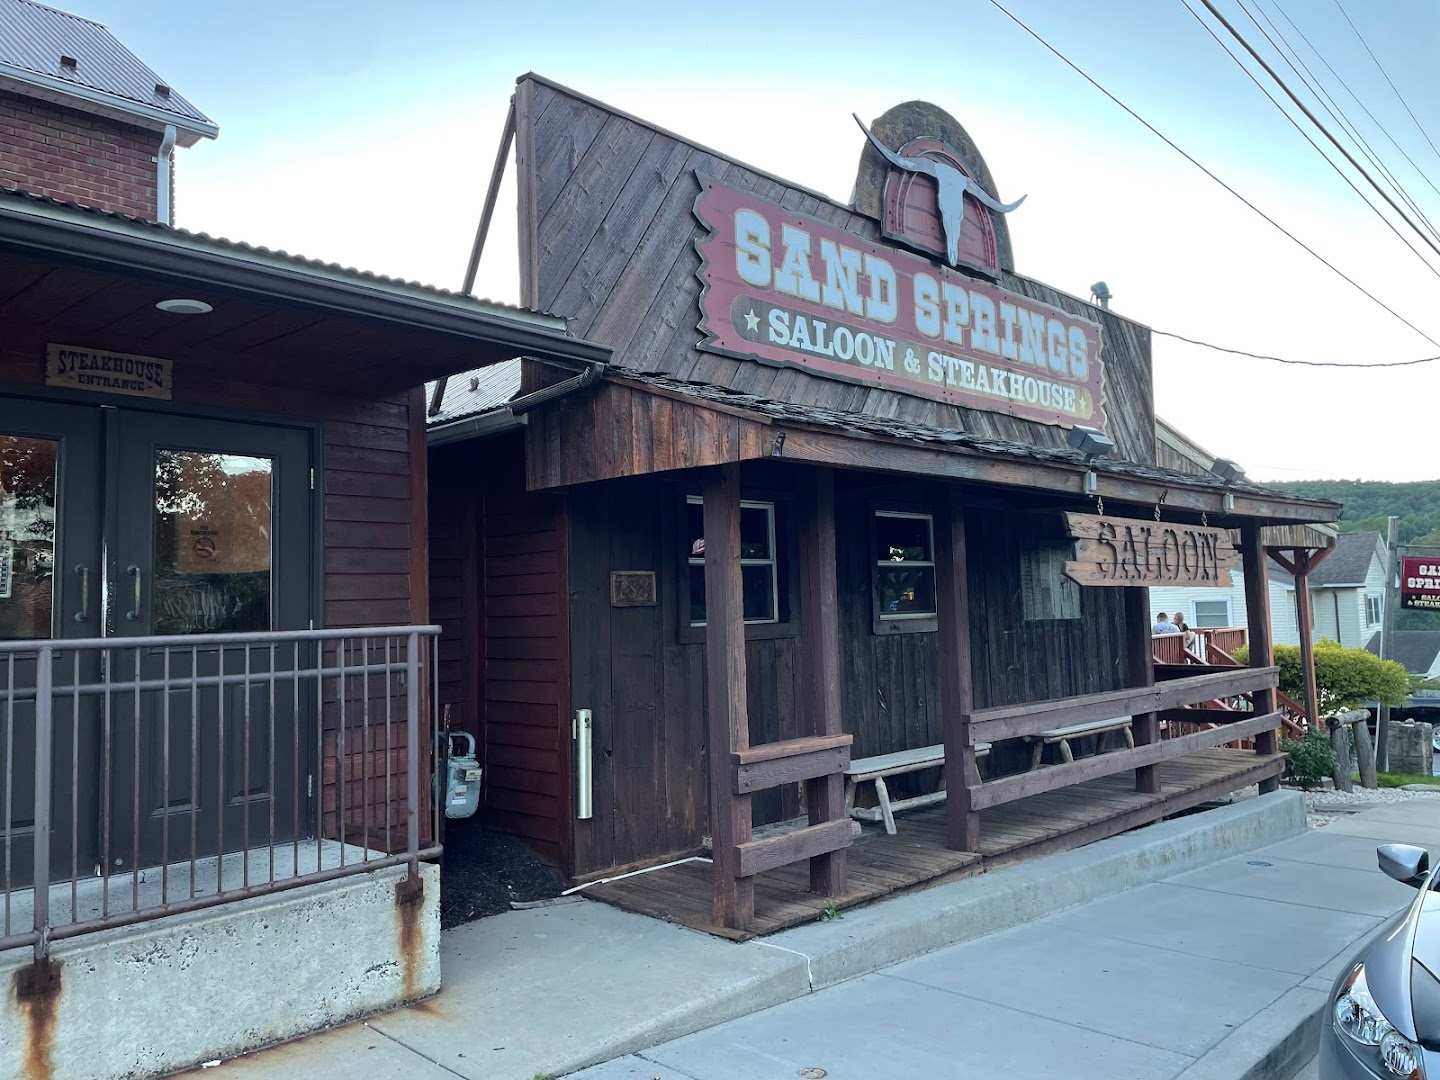 Sand Springs Saloon & Steakhouse